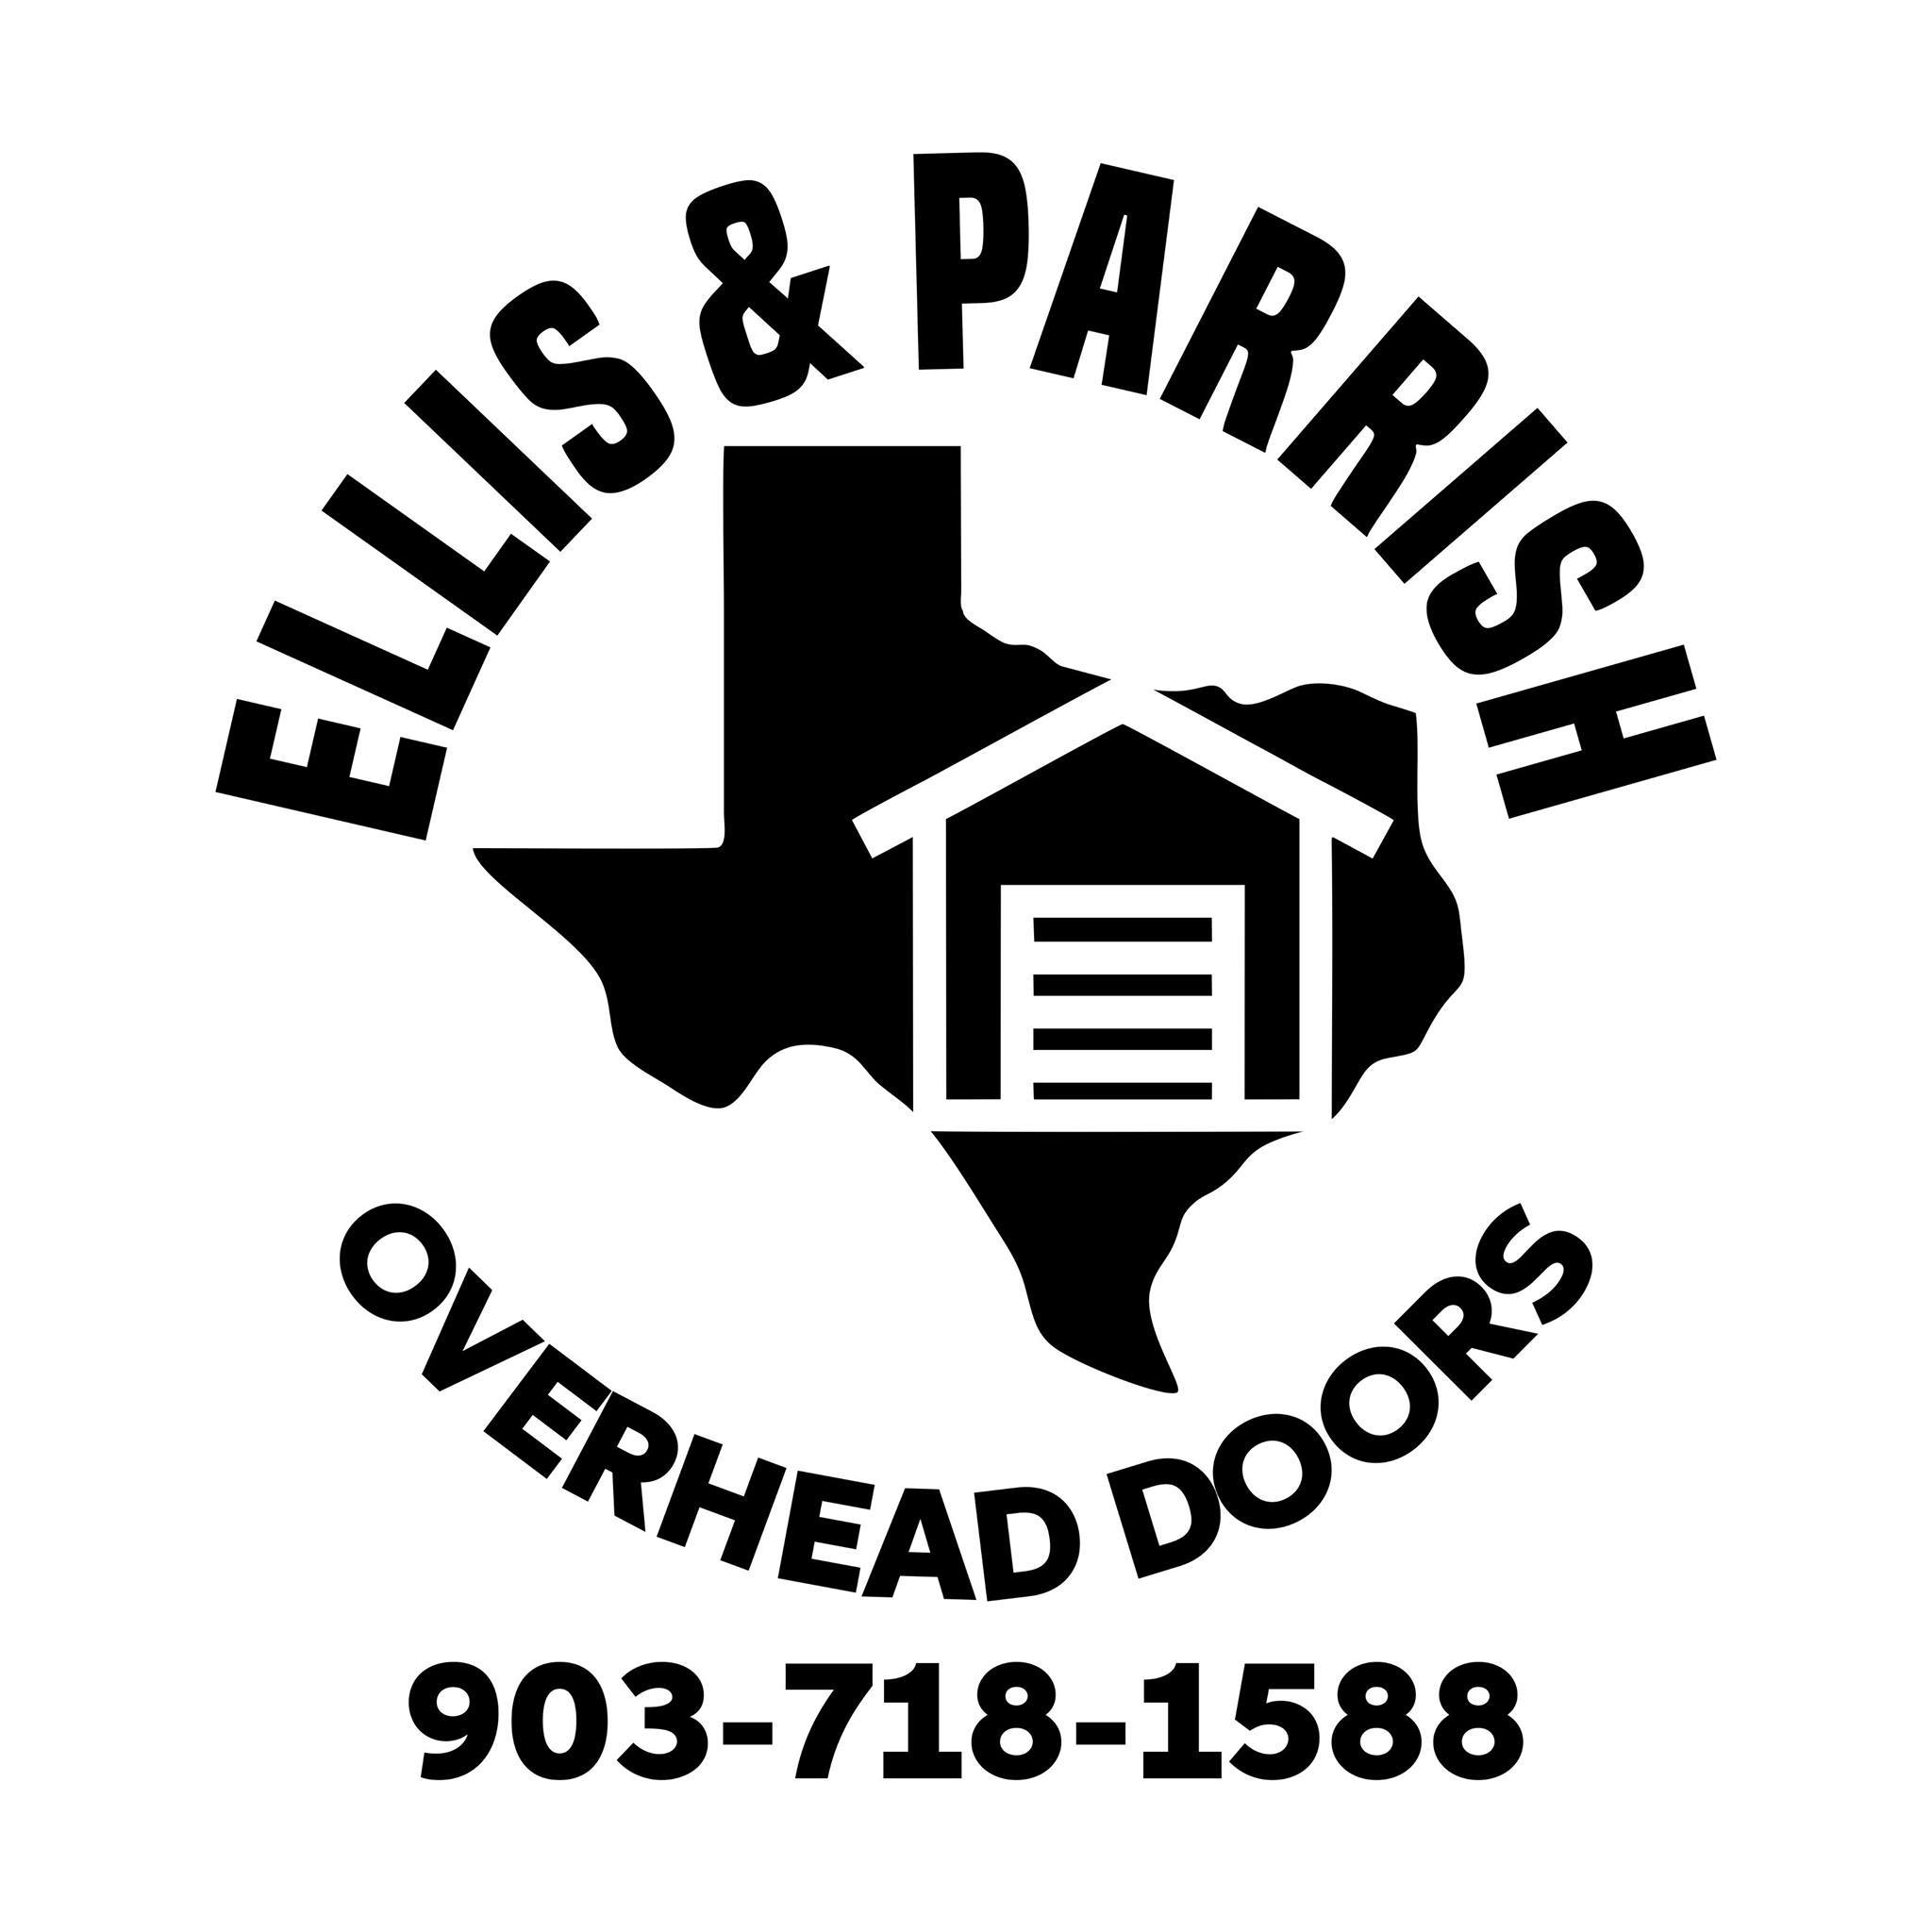 Business logo of Ellis and Parrish Overhead Doors